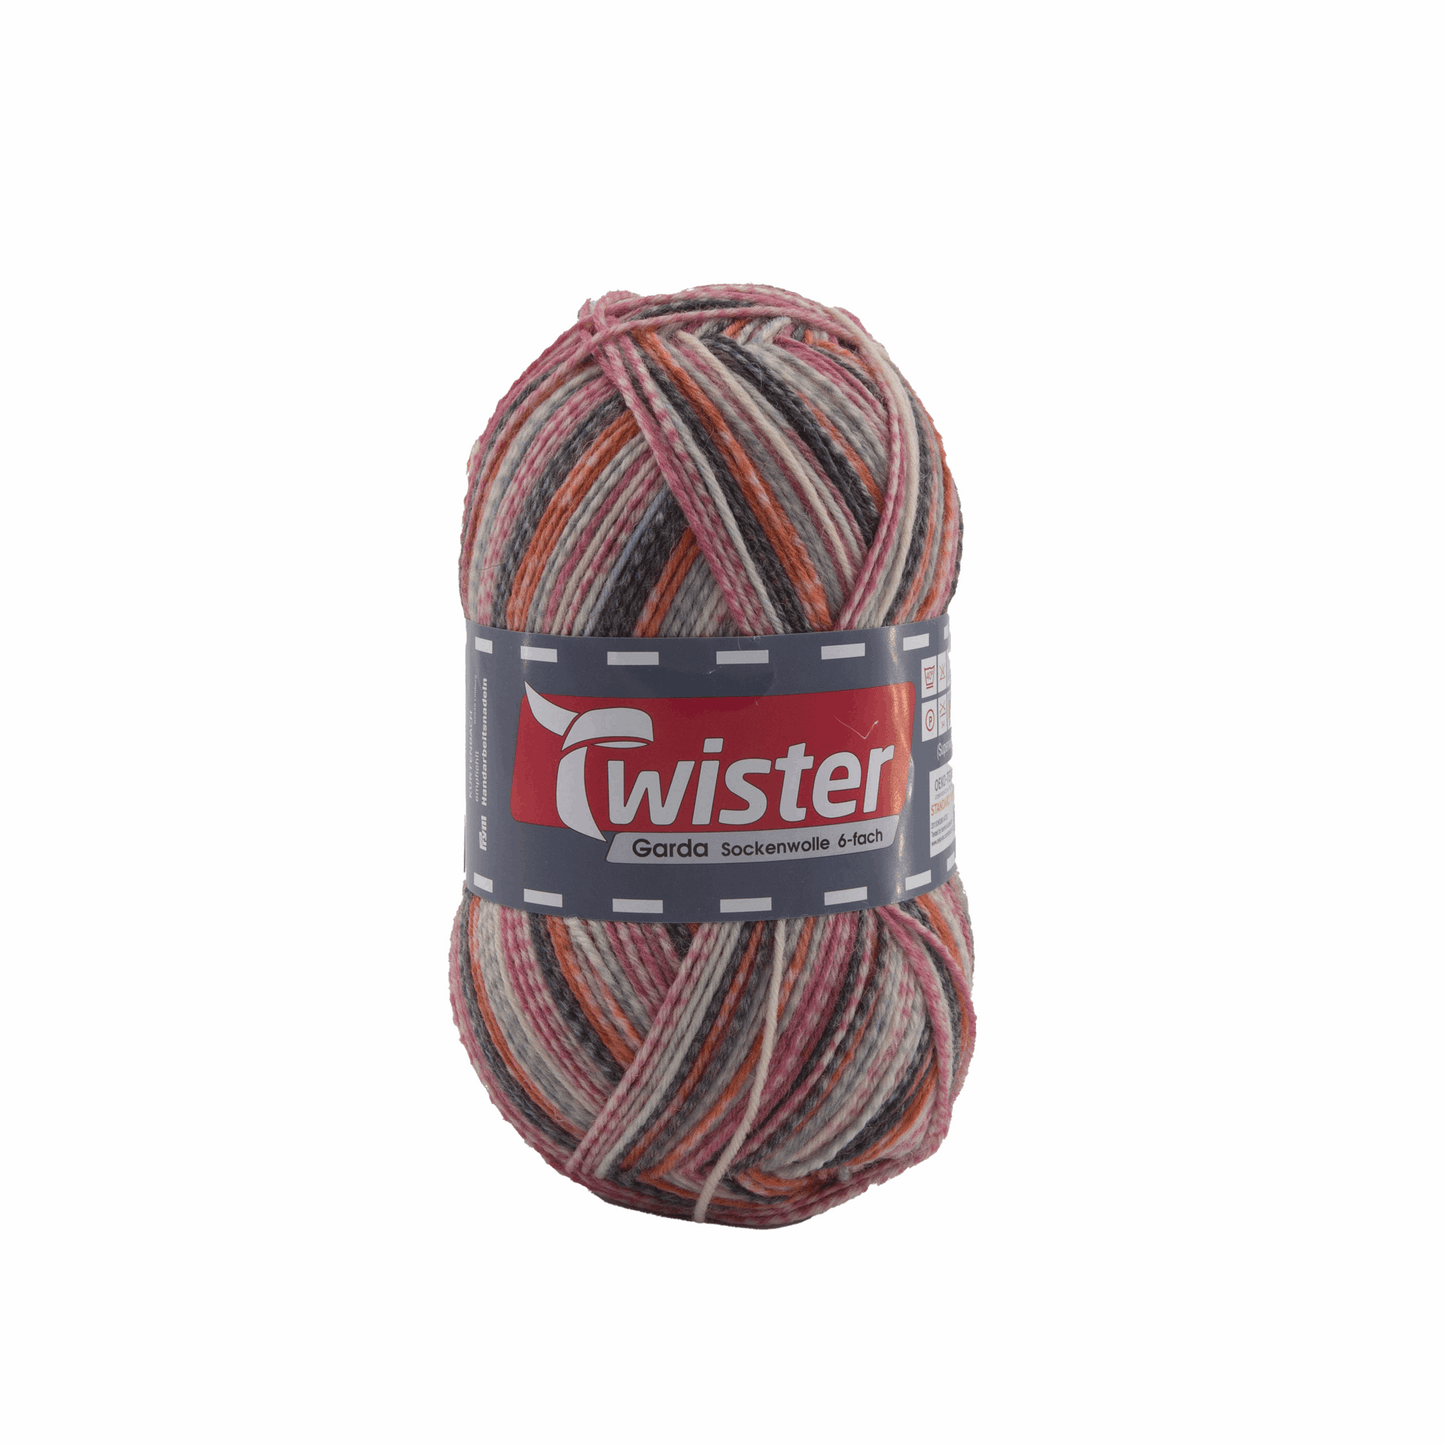 Twister Grada 6fädig 150G, 98530, Farbe beere color 718